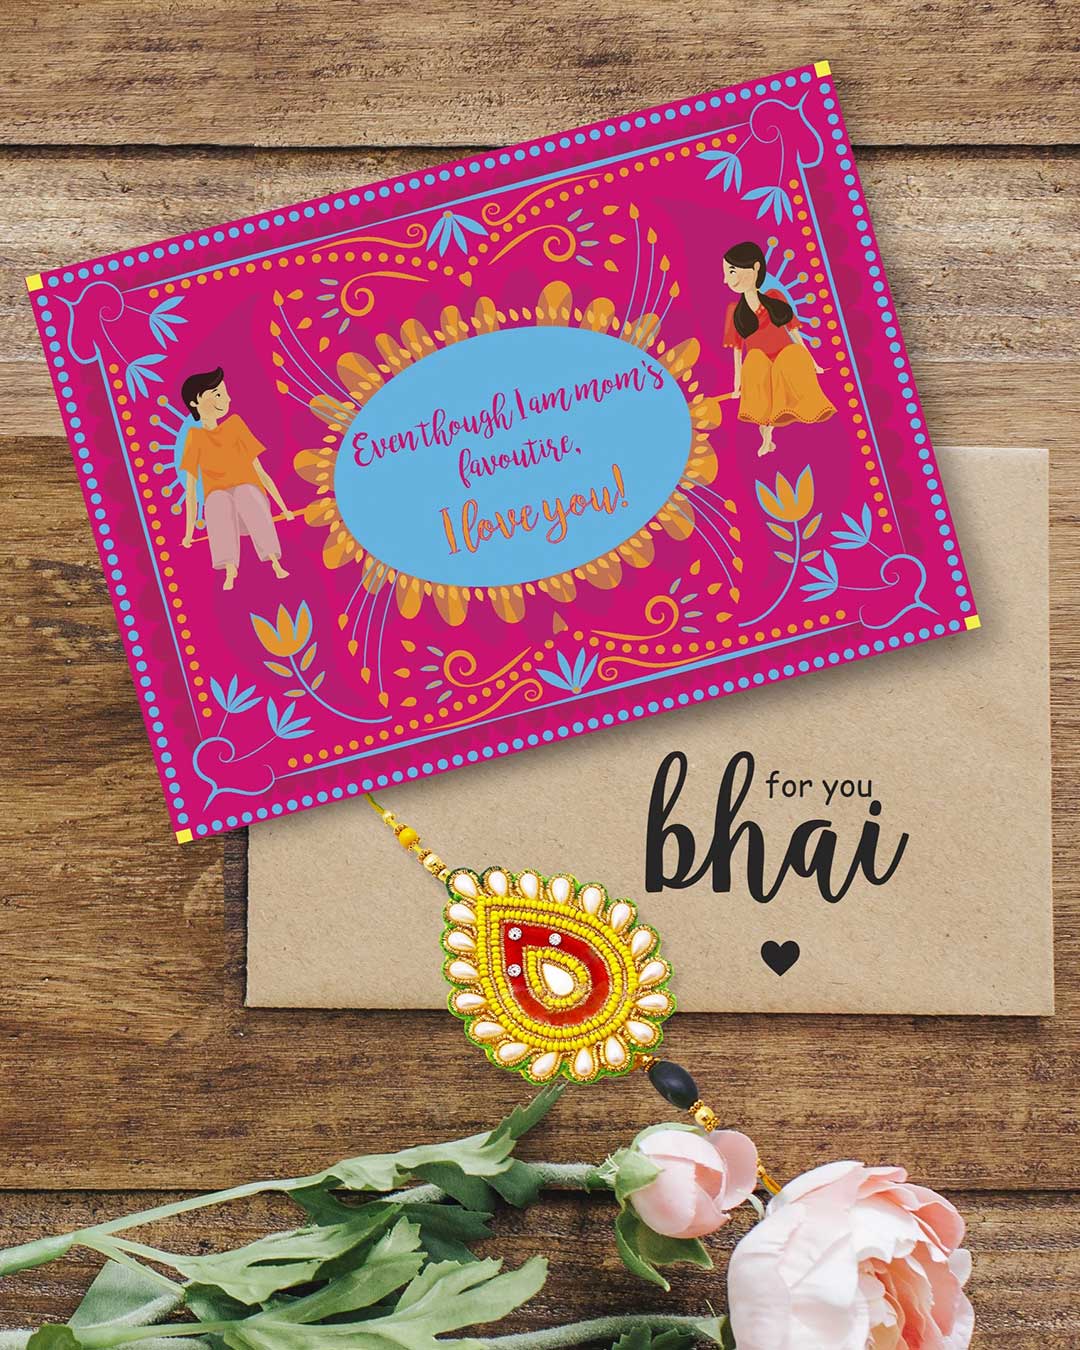 Raksha Bandhan Card For Brother